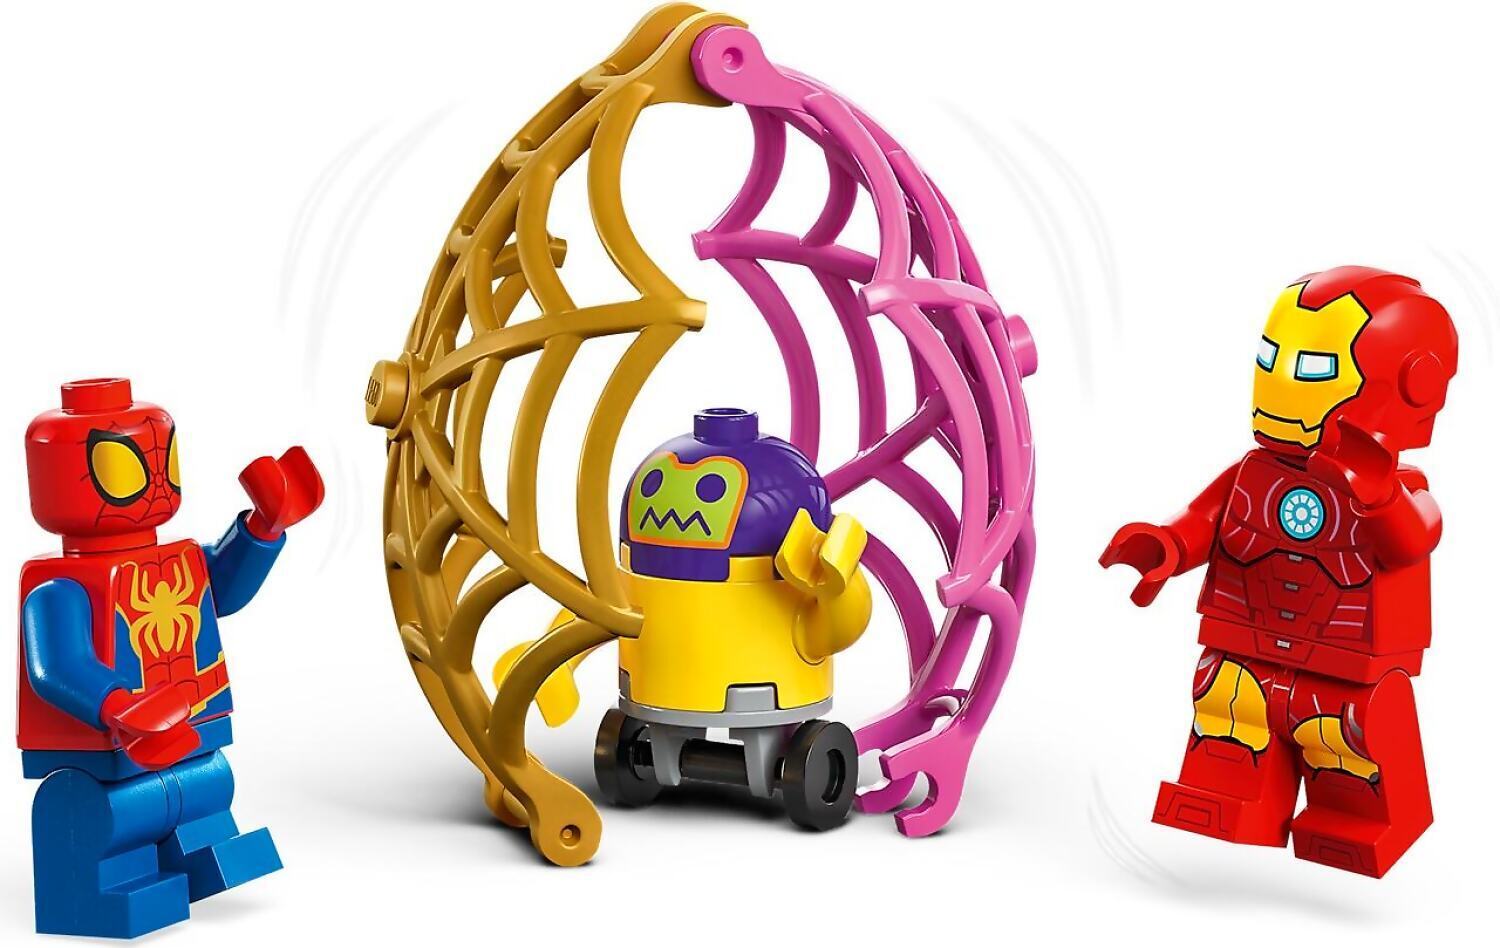 LEGO Marvel Team Spidey Web Spinner Headquarters 10794